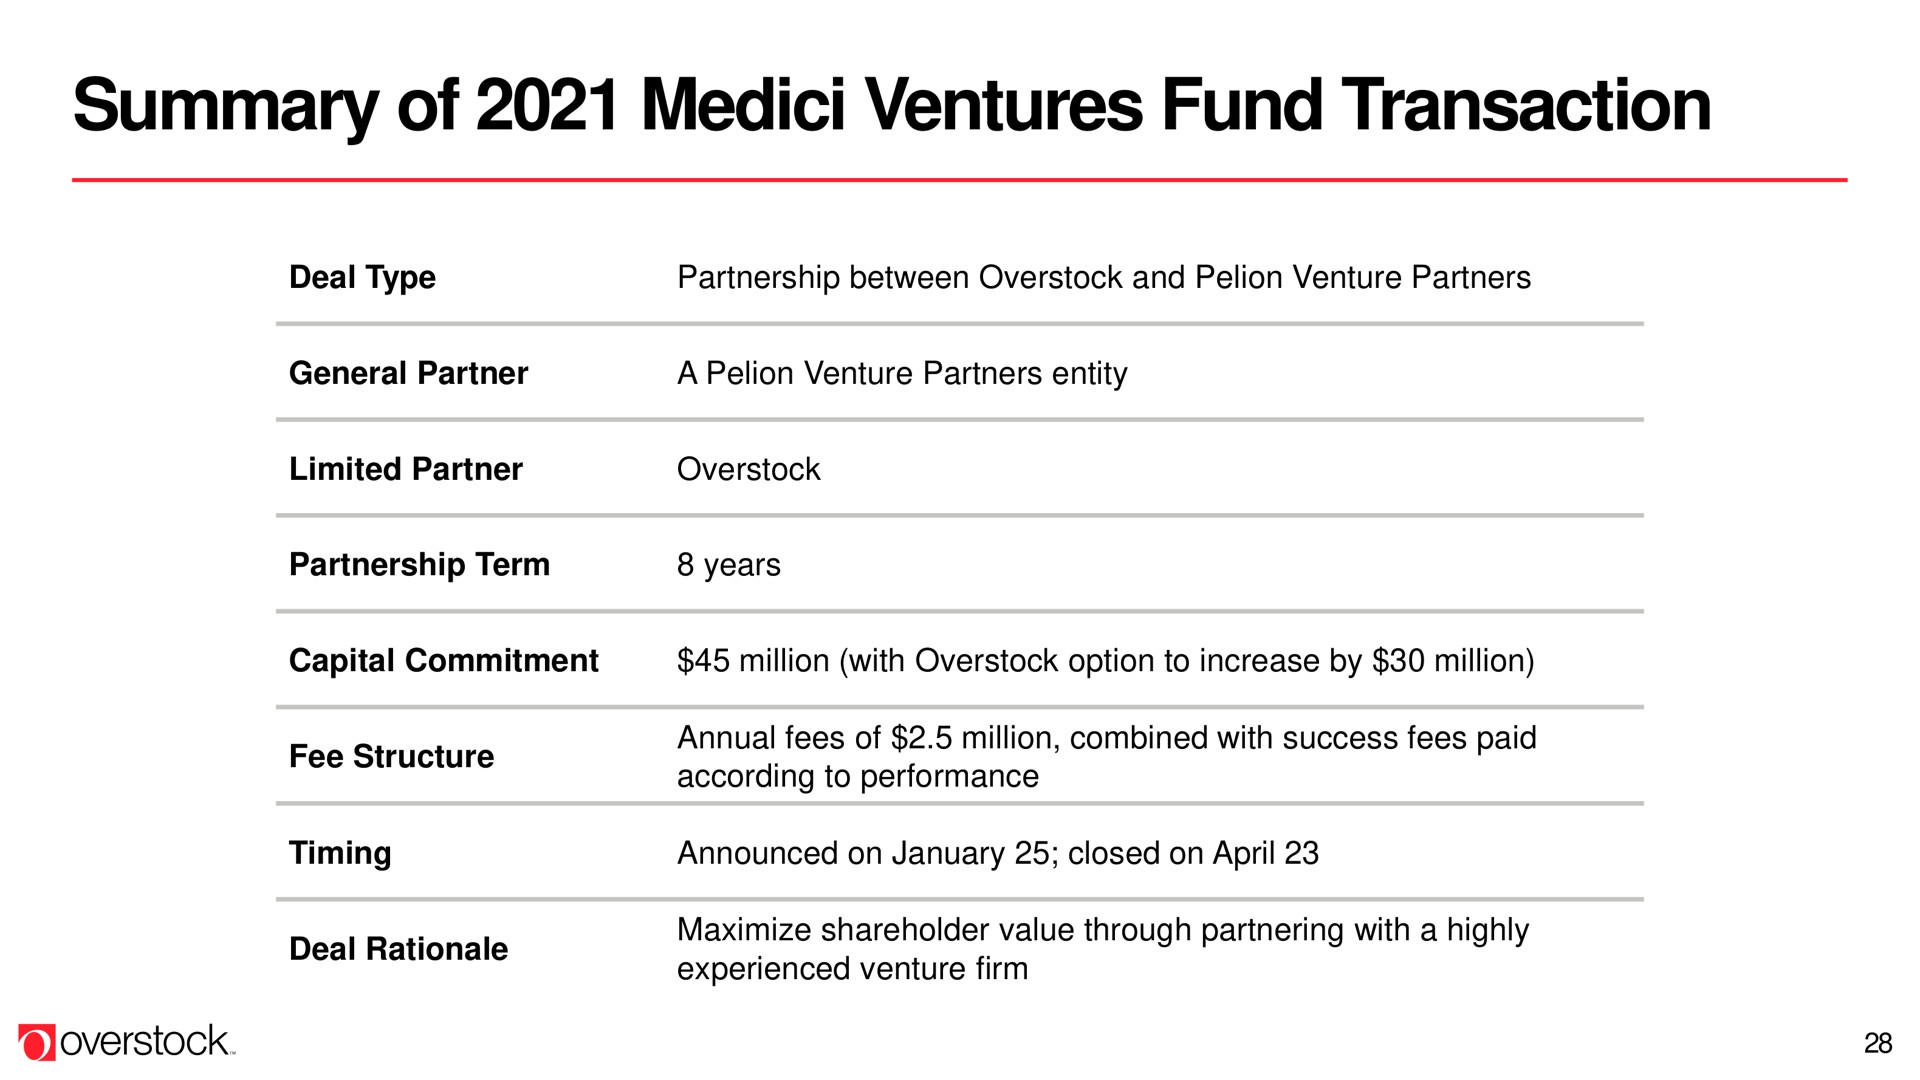 summary of ventures fund transaction | Overstock